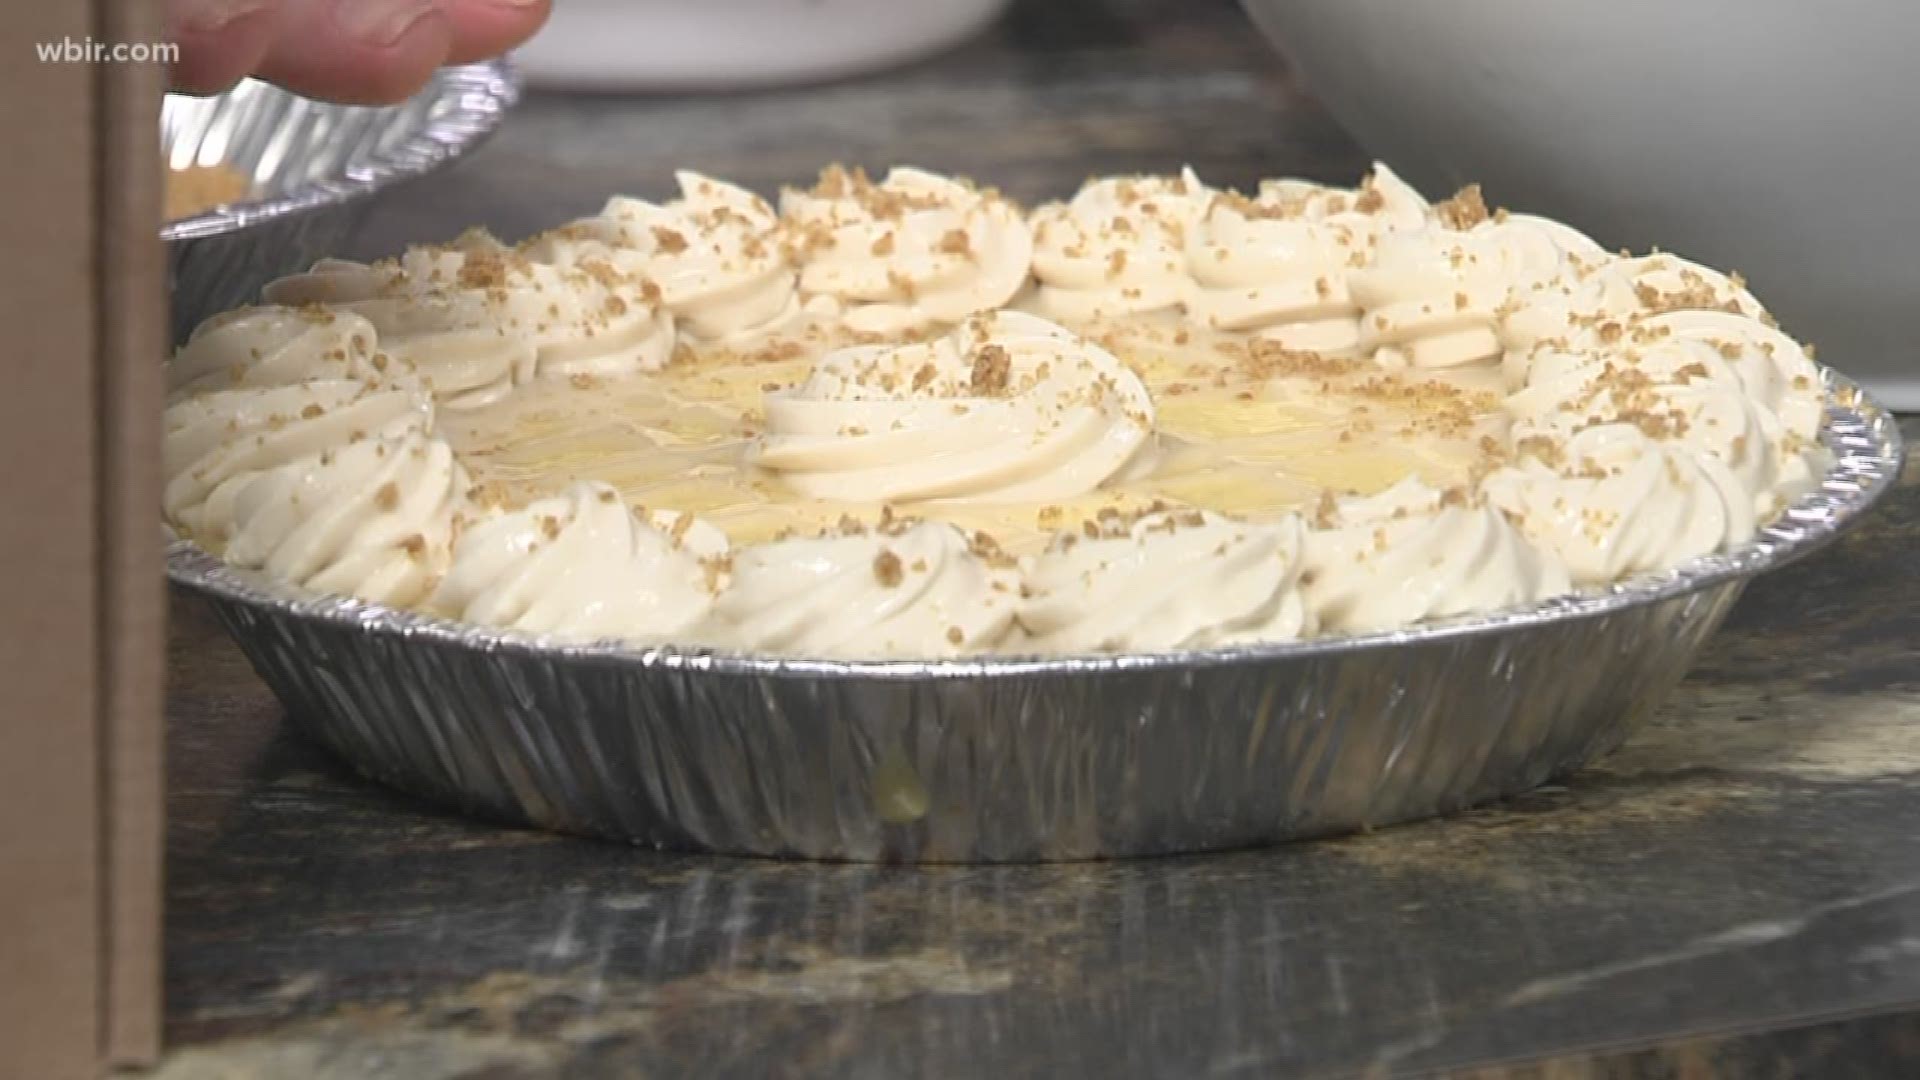 Buttermilk Sky Pie shows us how to make a key lime pie